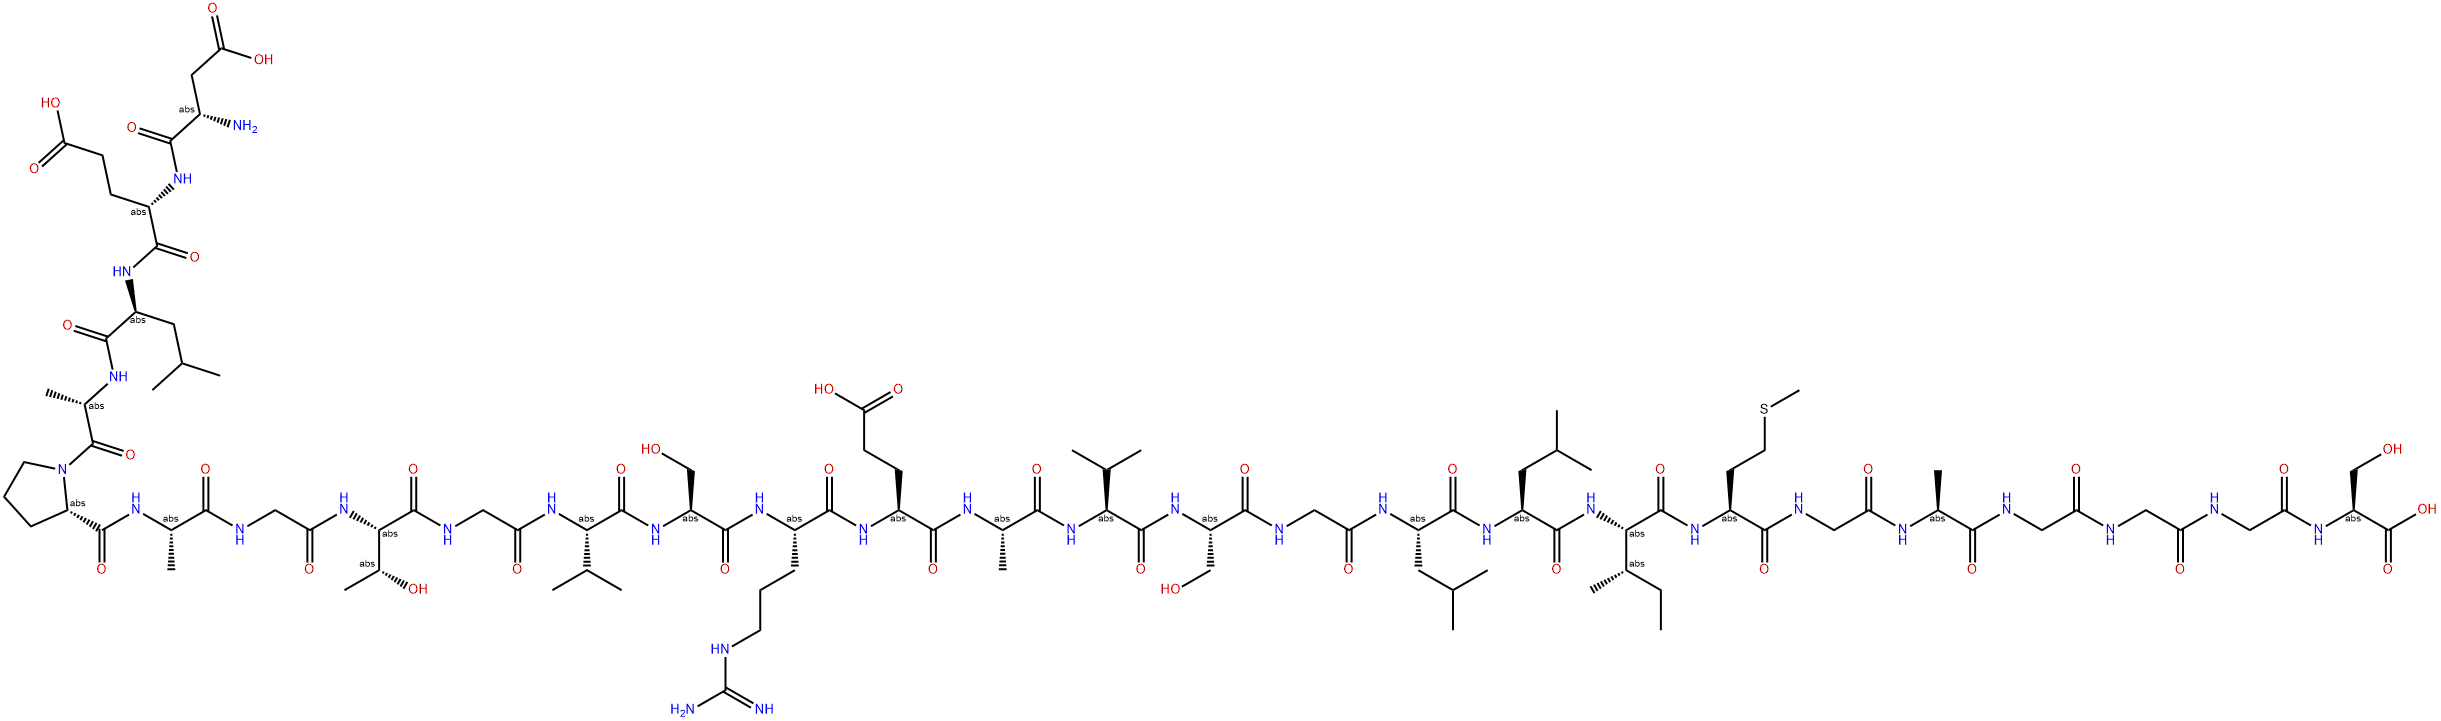 APLP1-derived Ab-like peptide (1-27)